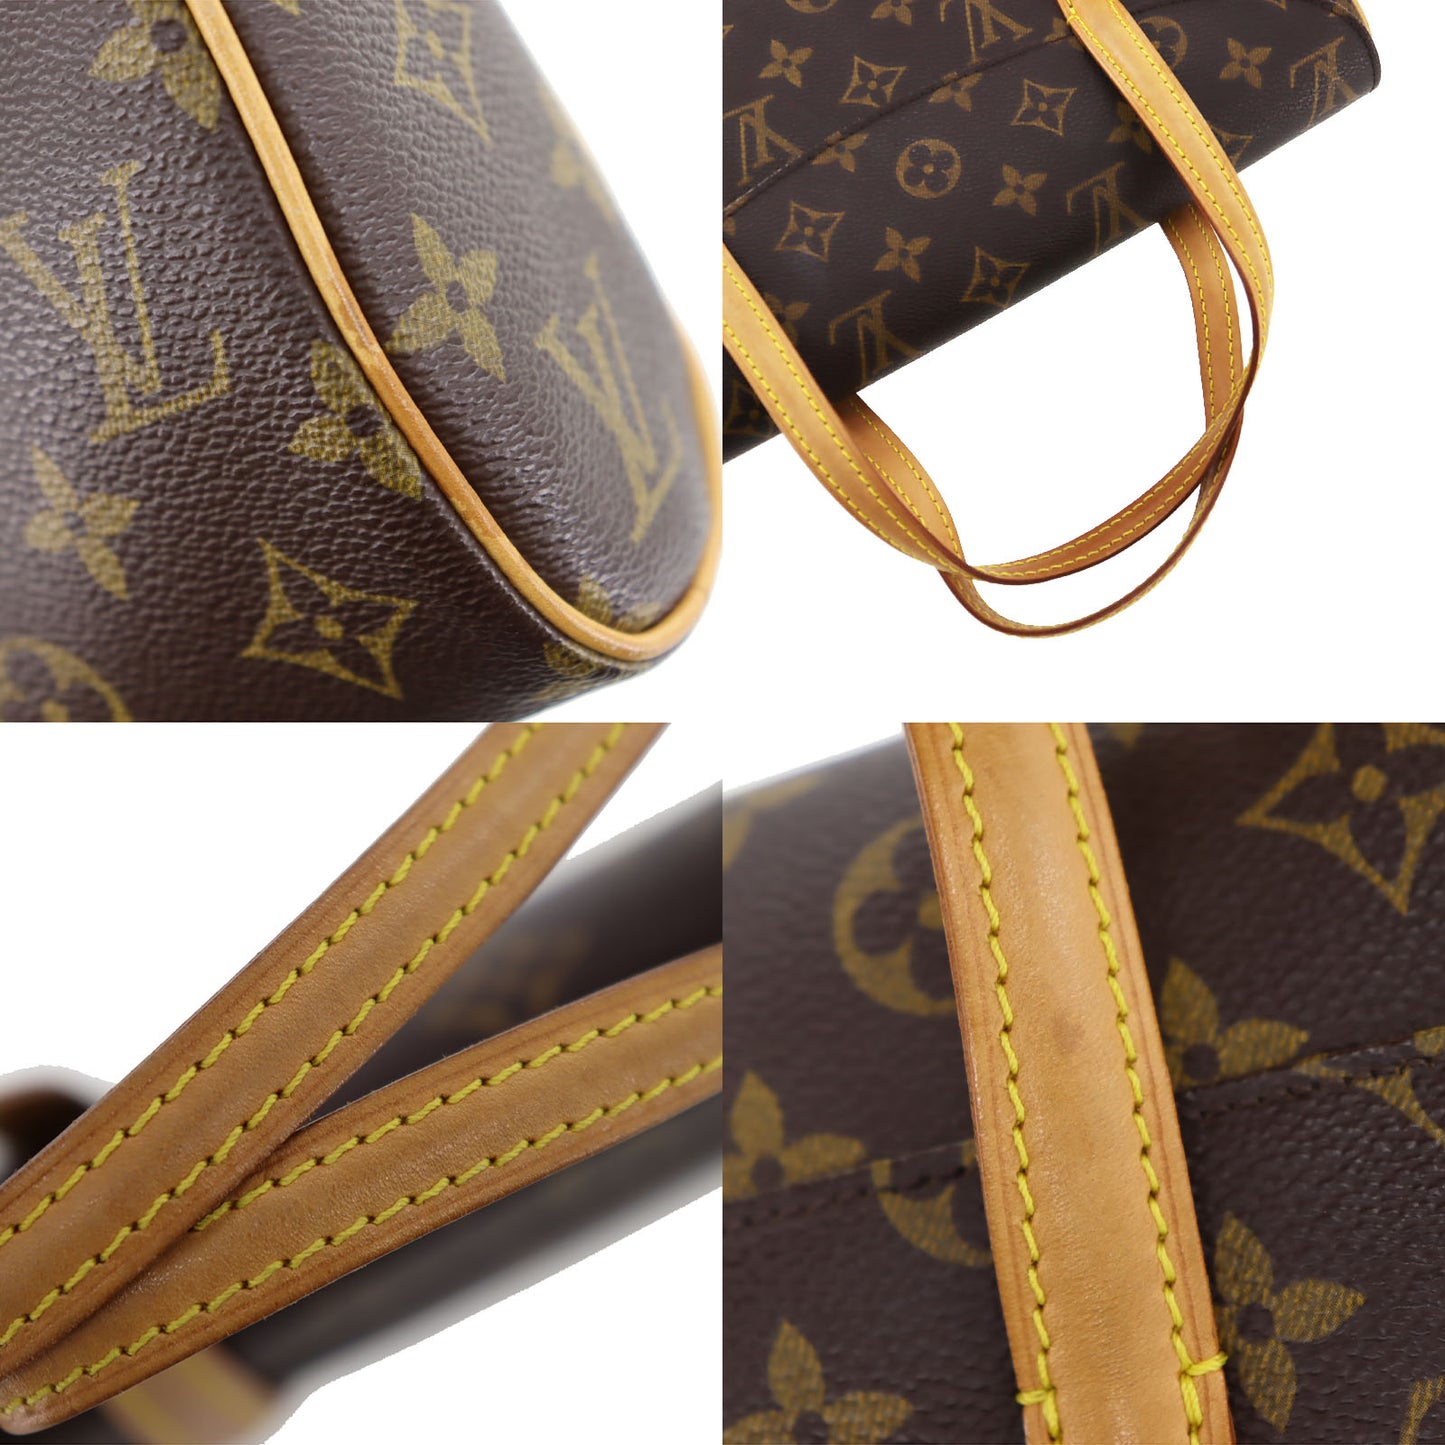 Louis Vuitton Monogram Sonatine M51902 Handbag